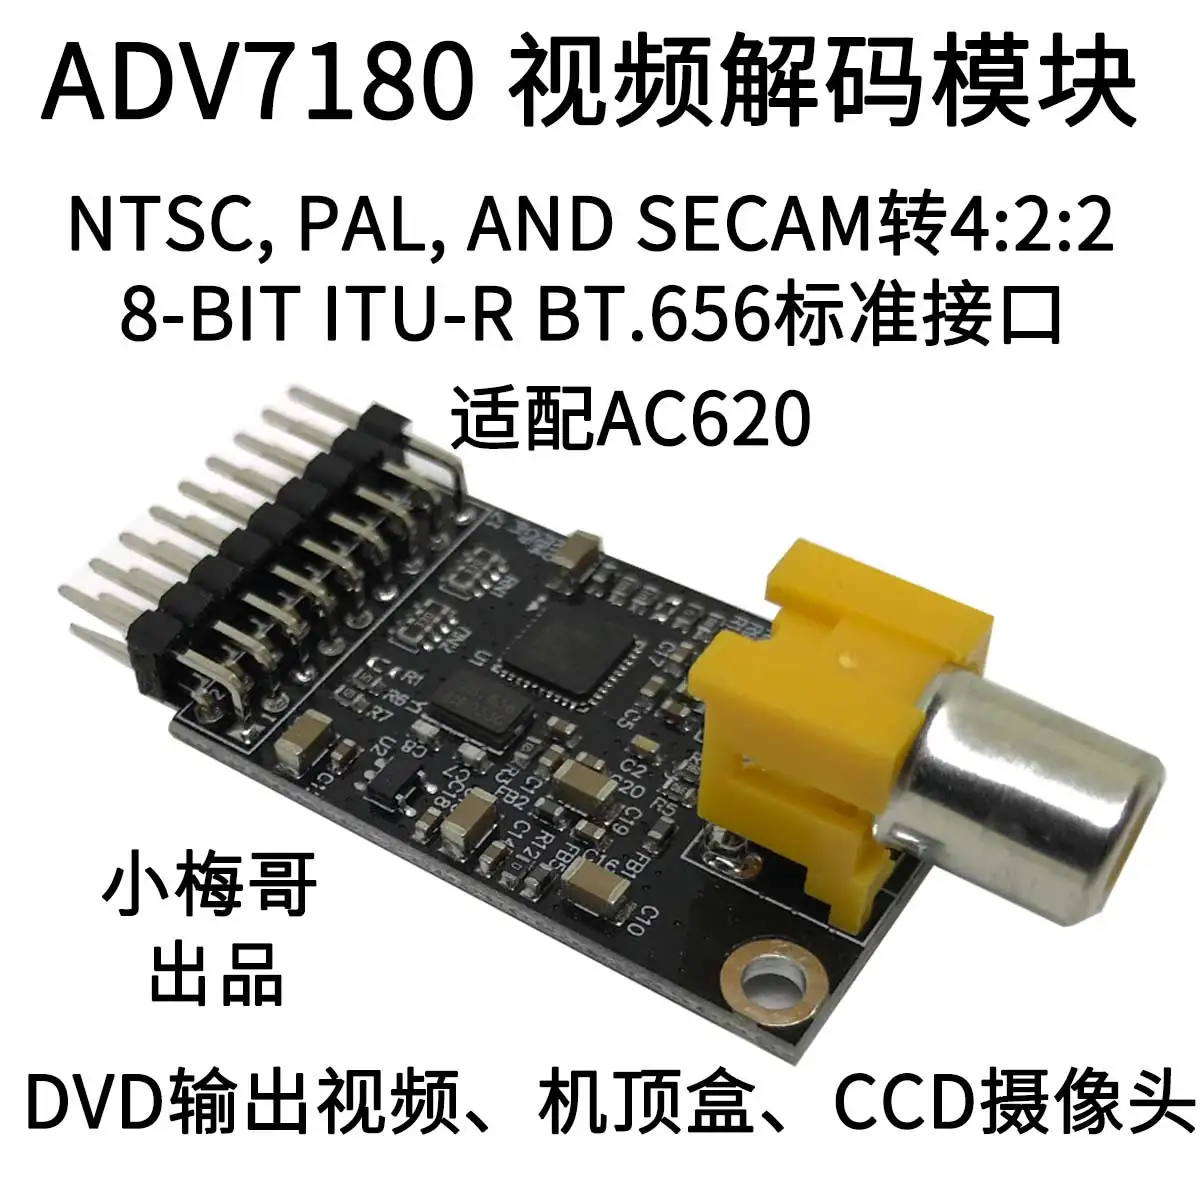 FPGA ADV7180 Camera CCD/PAL decoding module, same as OV7670 interface